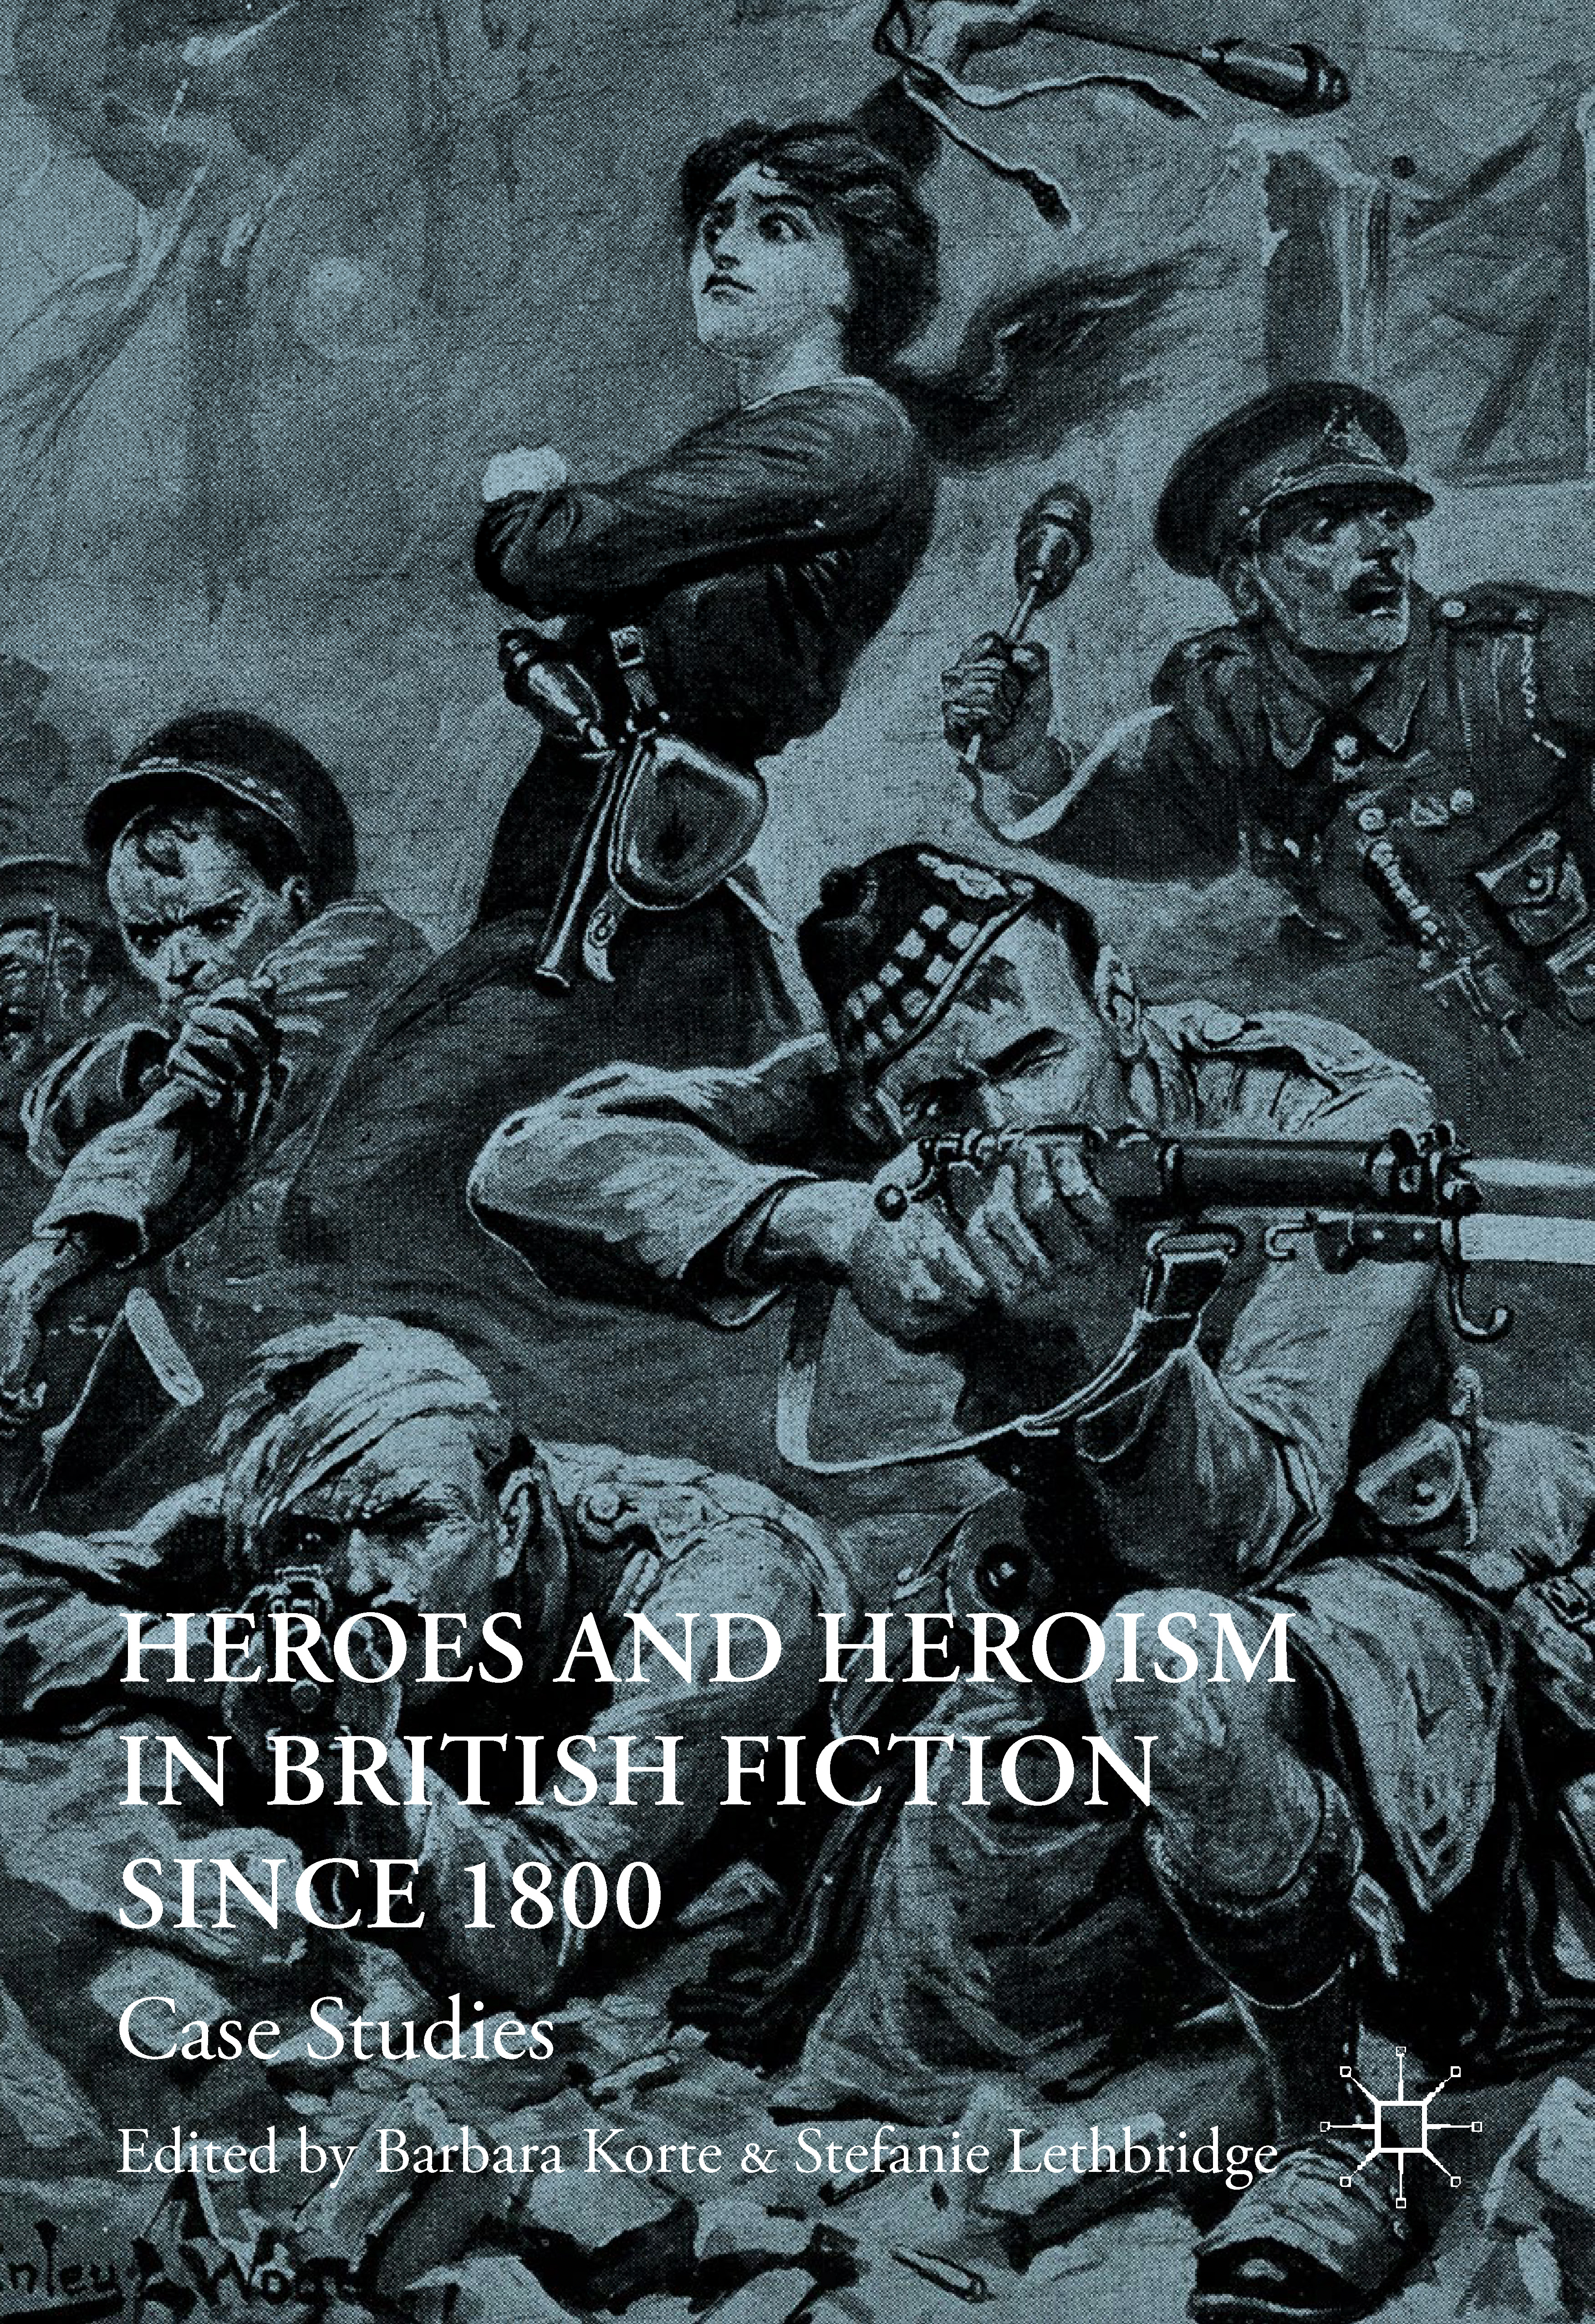 New Release | Barbara Korte & Stefanie Lethbridge: "Heroes and Heroism in British Fiction Since 1800"